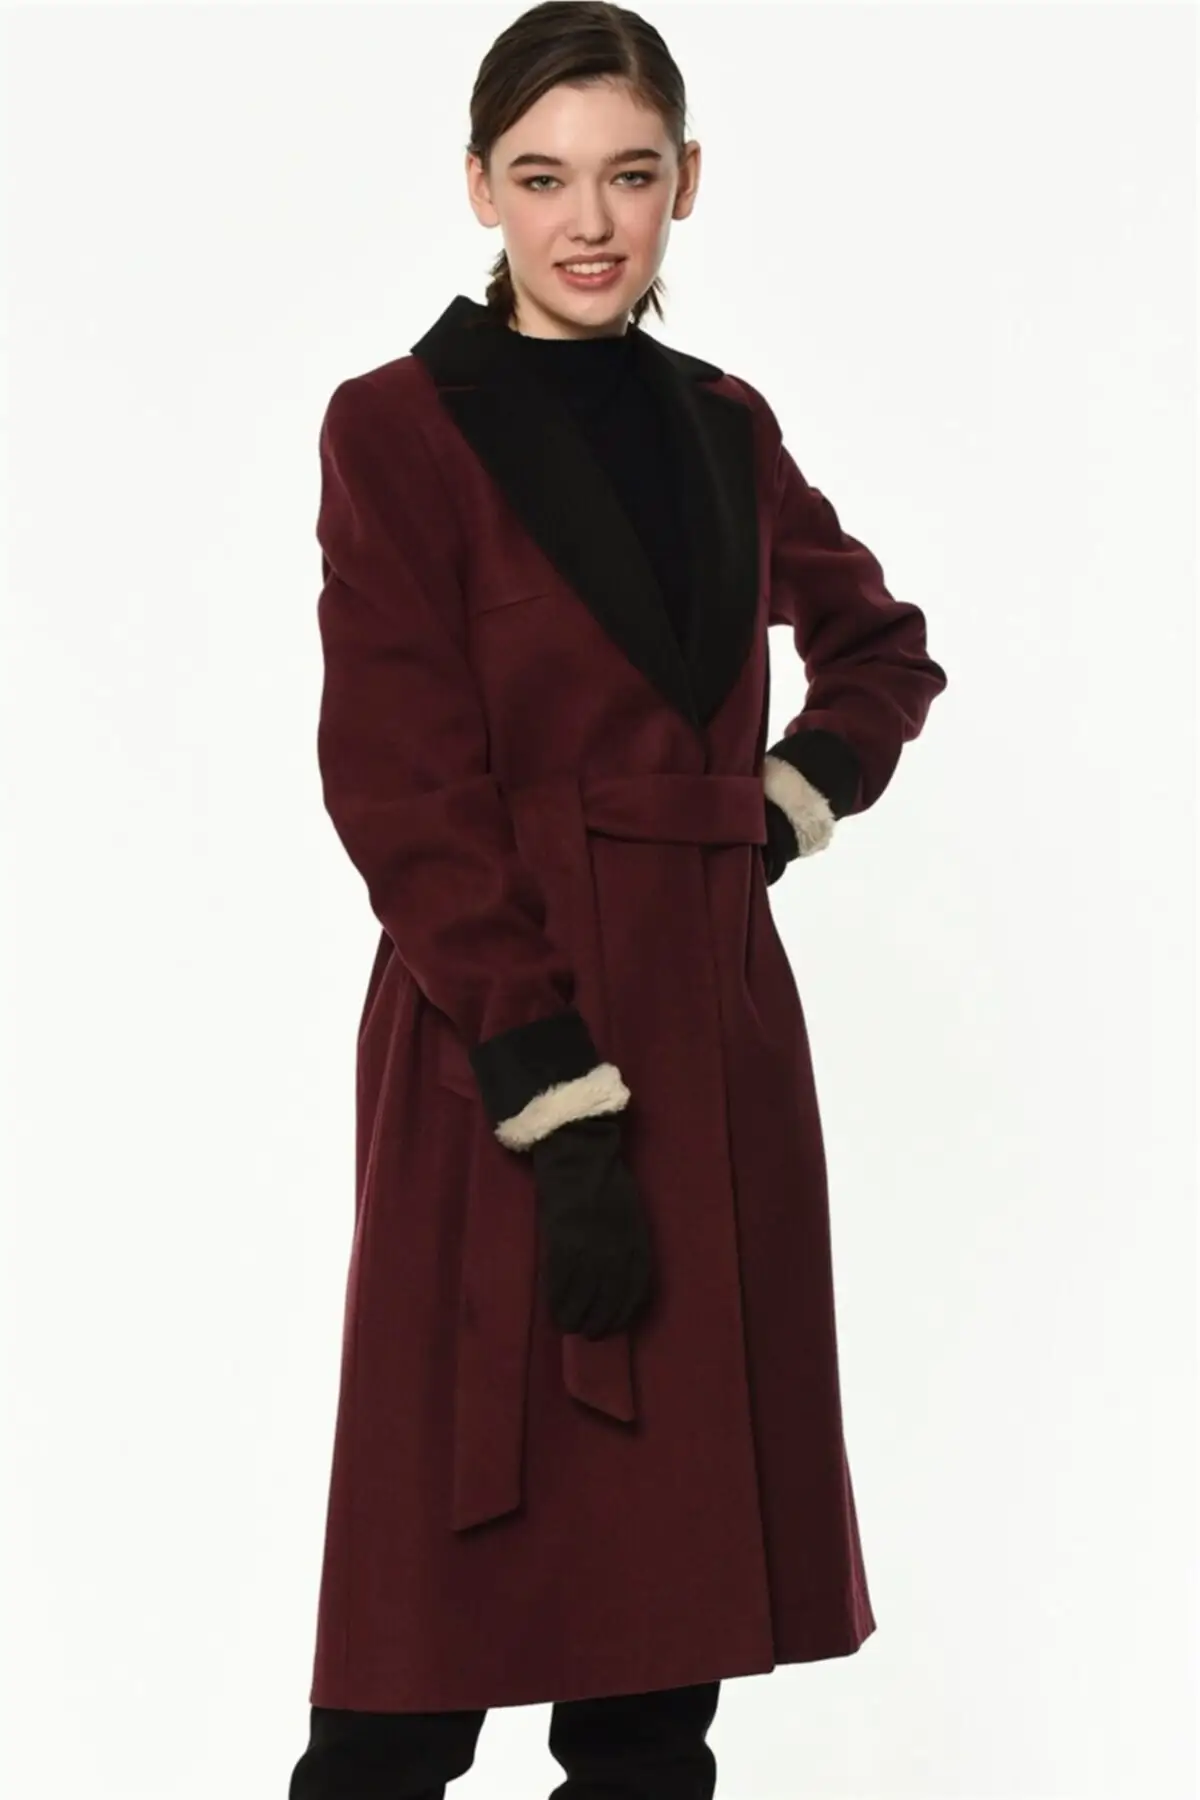 

Women's Coats Burgundy Black Long Sleeve Thick Belt Stylish Elegant Useful 2021 Winter Autumn Fashion Outerwear Coats